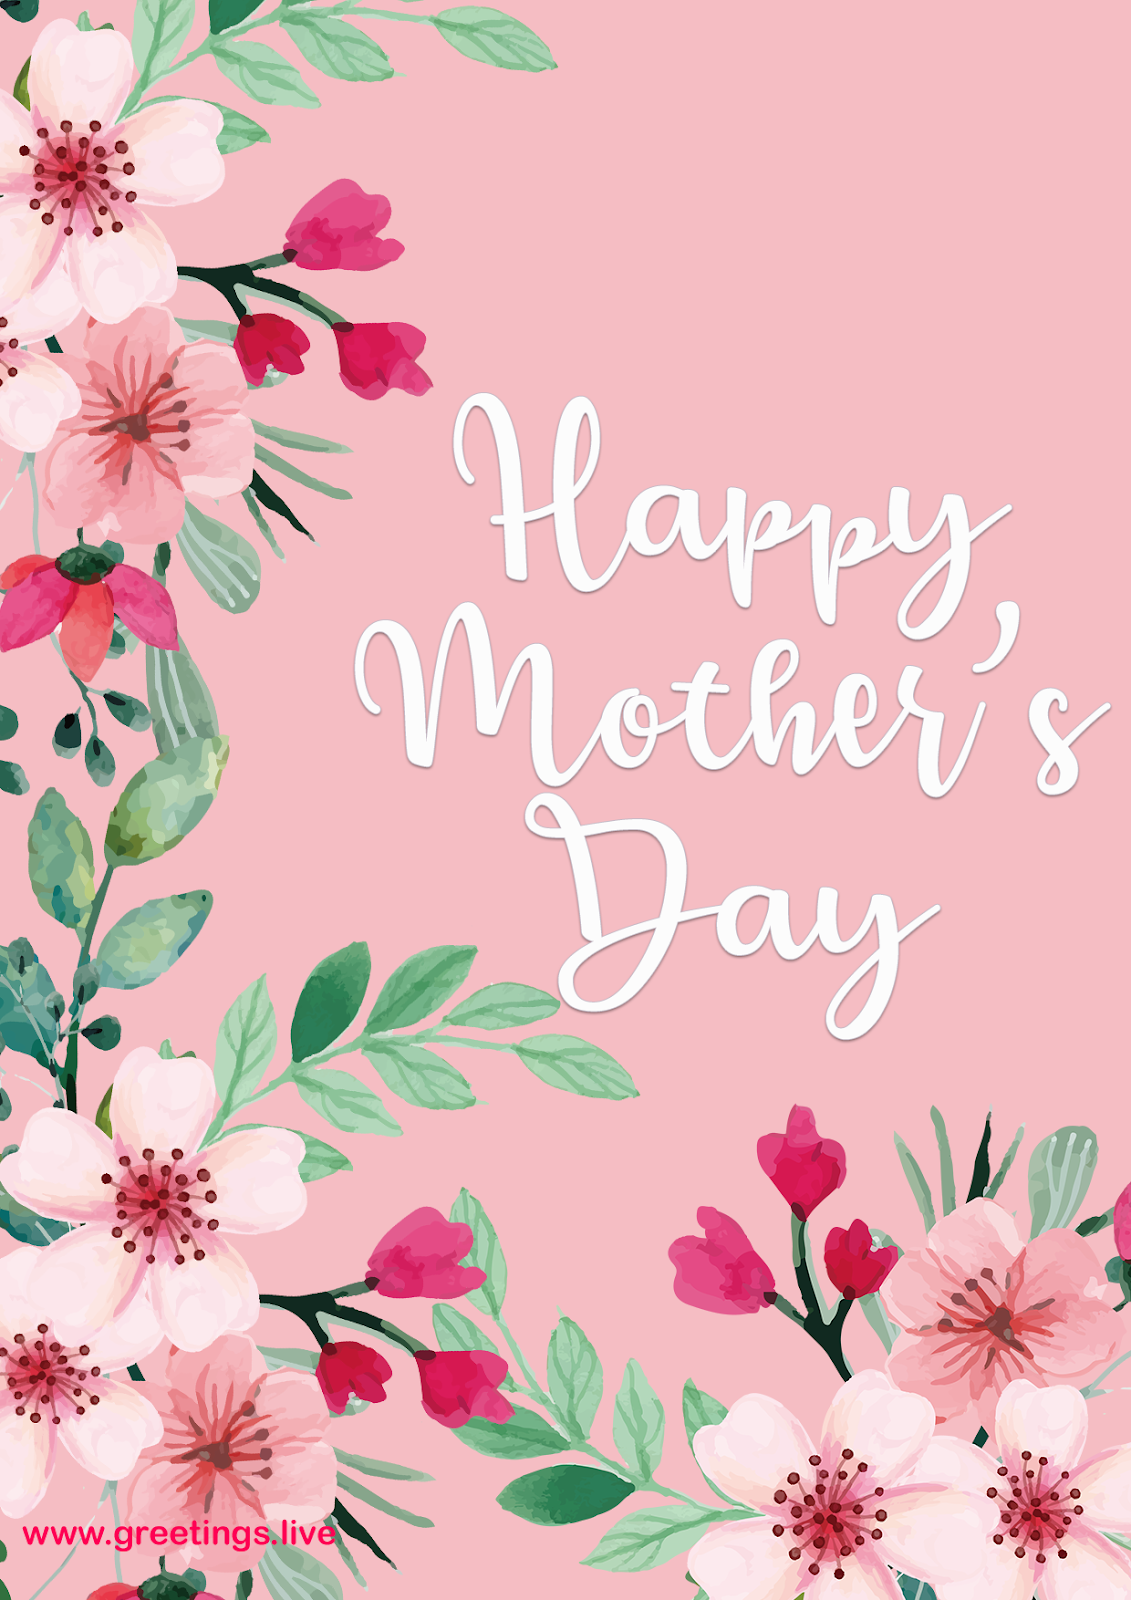 https://1.bp.blogspot.com/-p2mo6RNTxpk/XNQQvFlhwFI/AAAAAAAAV2s/iHwbTtHdlZImFZLX06jyqV_IsHZeFndwwCLcBGAs/s1600/happy-mothers-day-2019-flowers-greetings-free-download.png